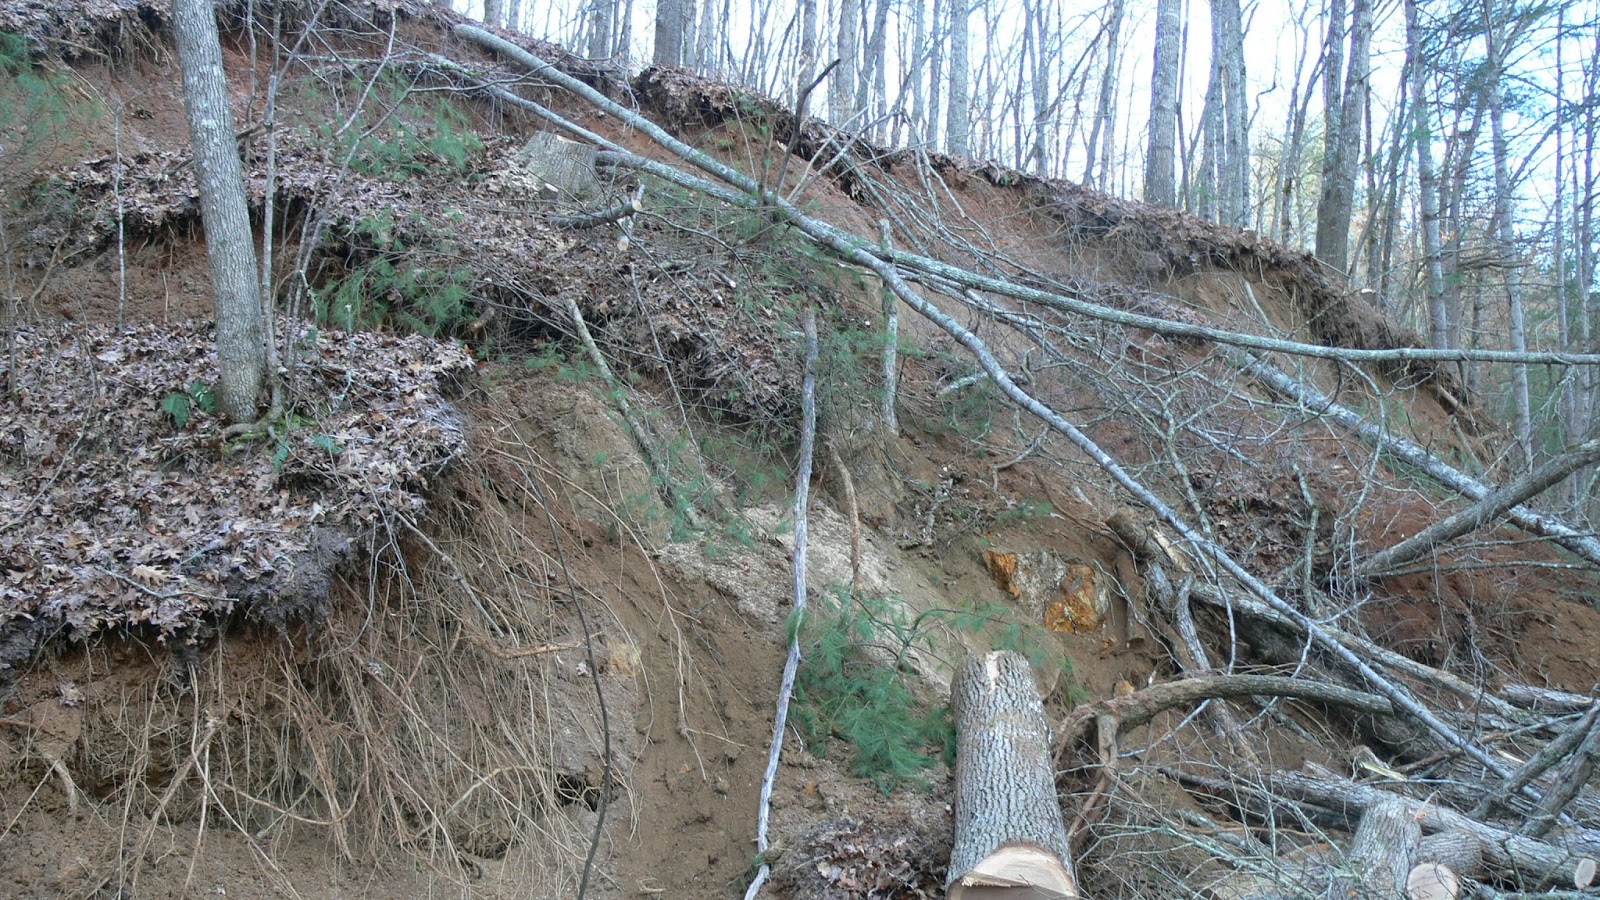 A look at the landslide